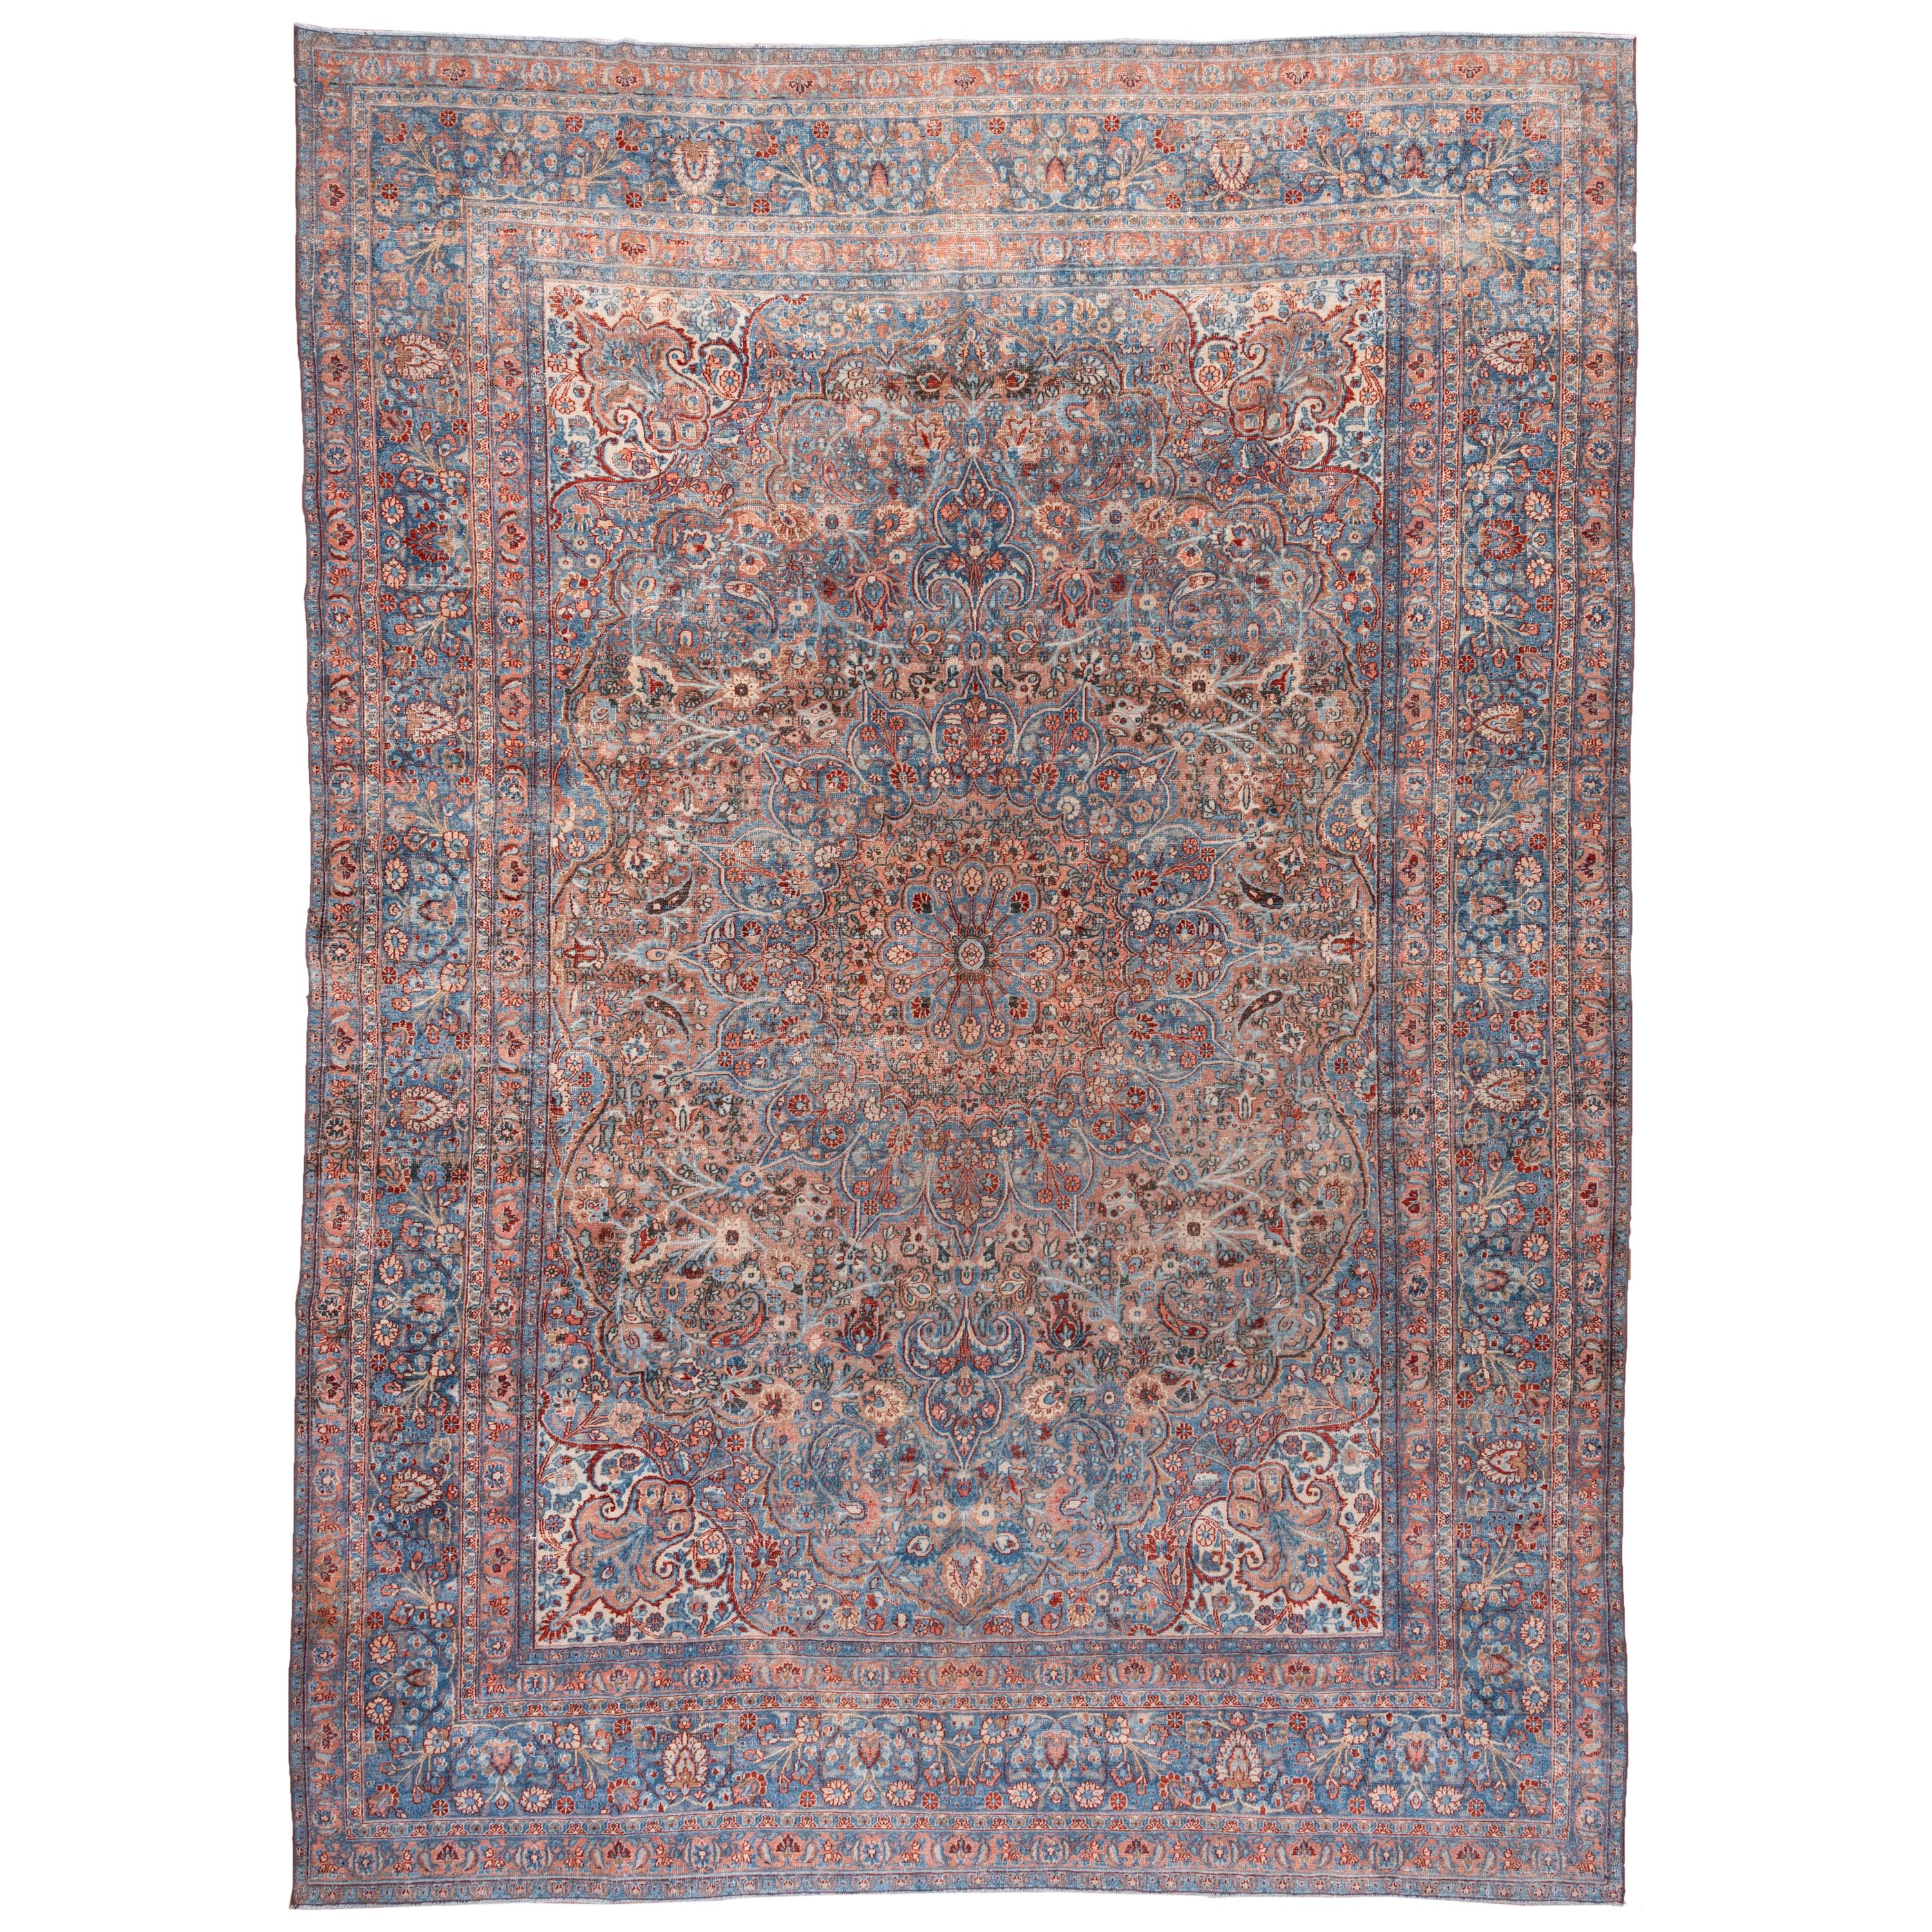 Antique Persian Khorassan Carpet, Blue Tones, Pink Tones, Salmon Tones For Sale